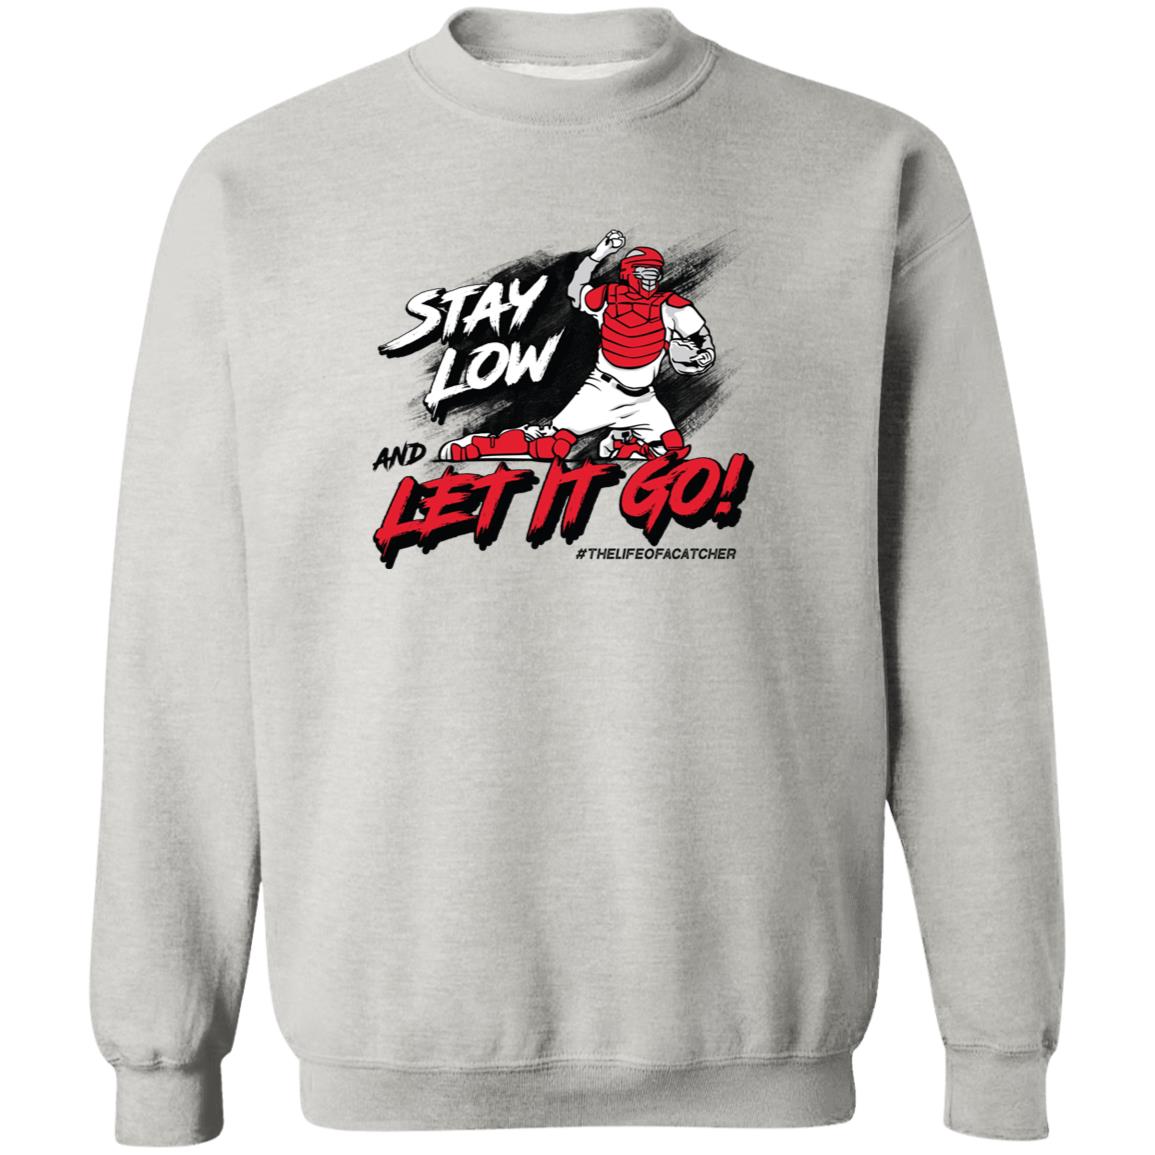 Stay Low & Let It Go Crewneck Sweatshirt - Heather Grey